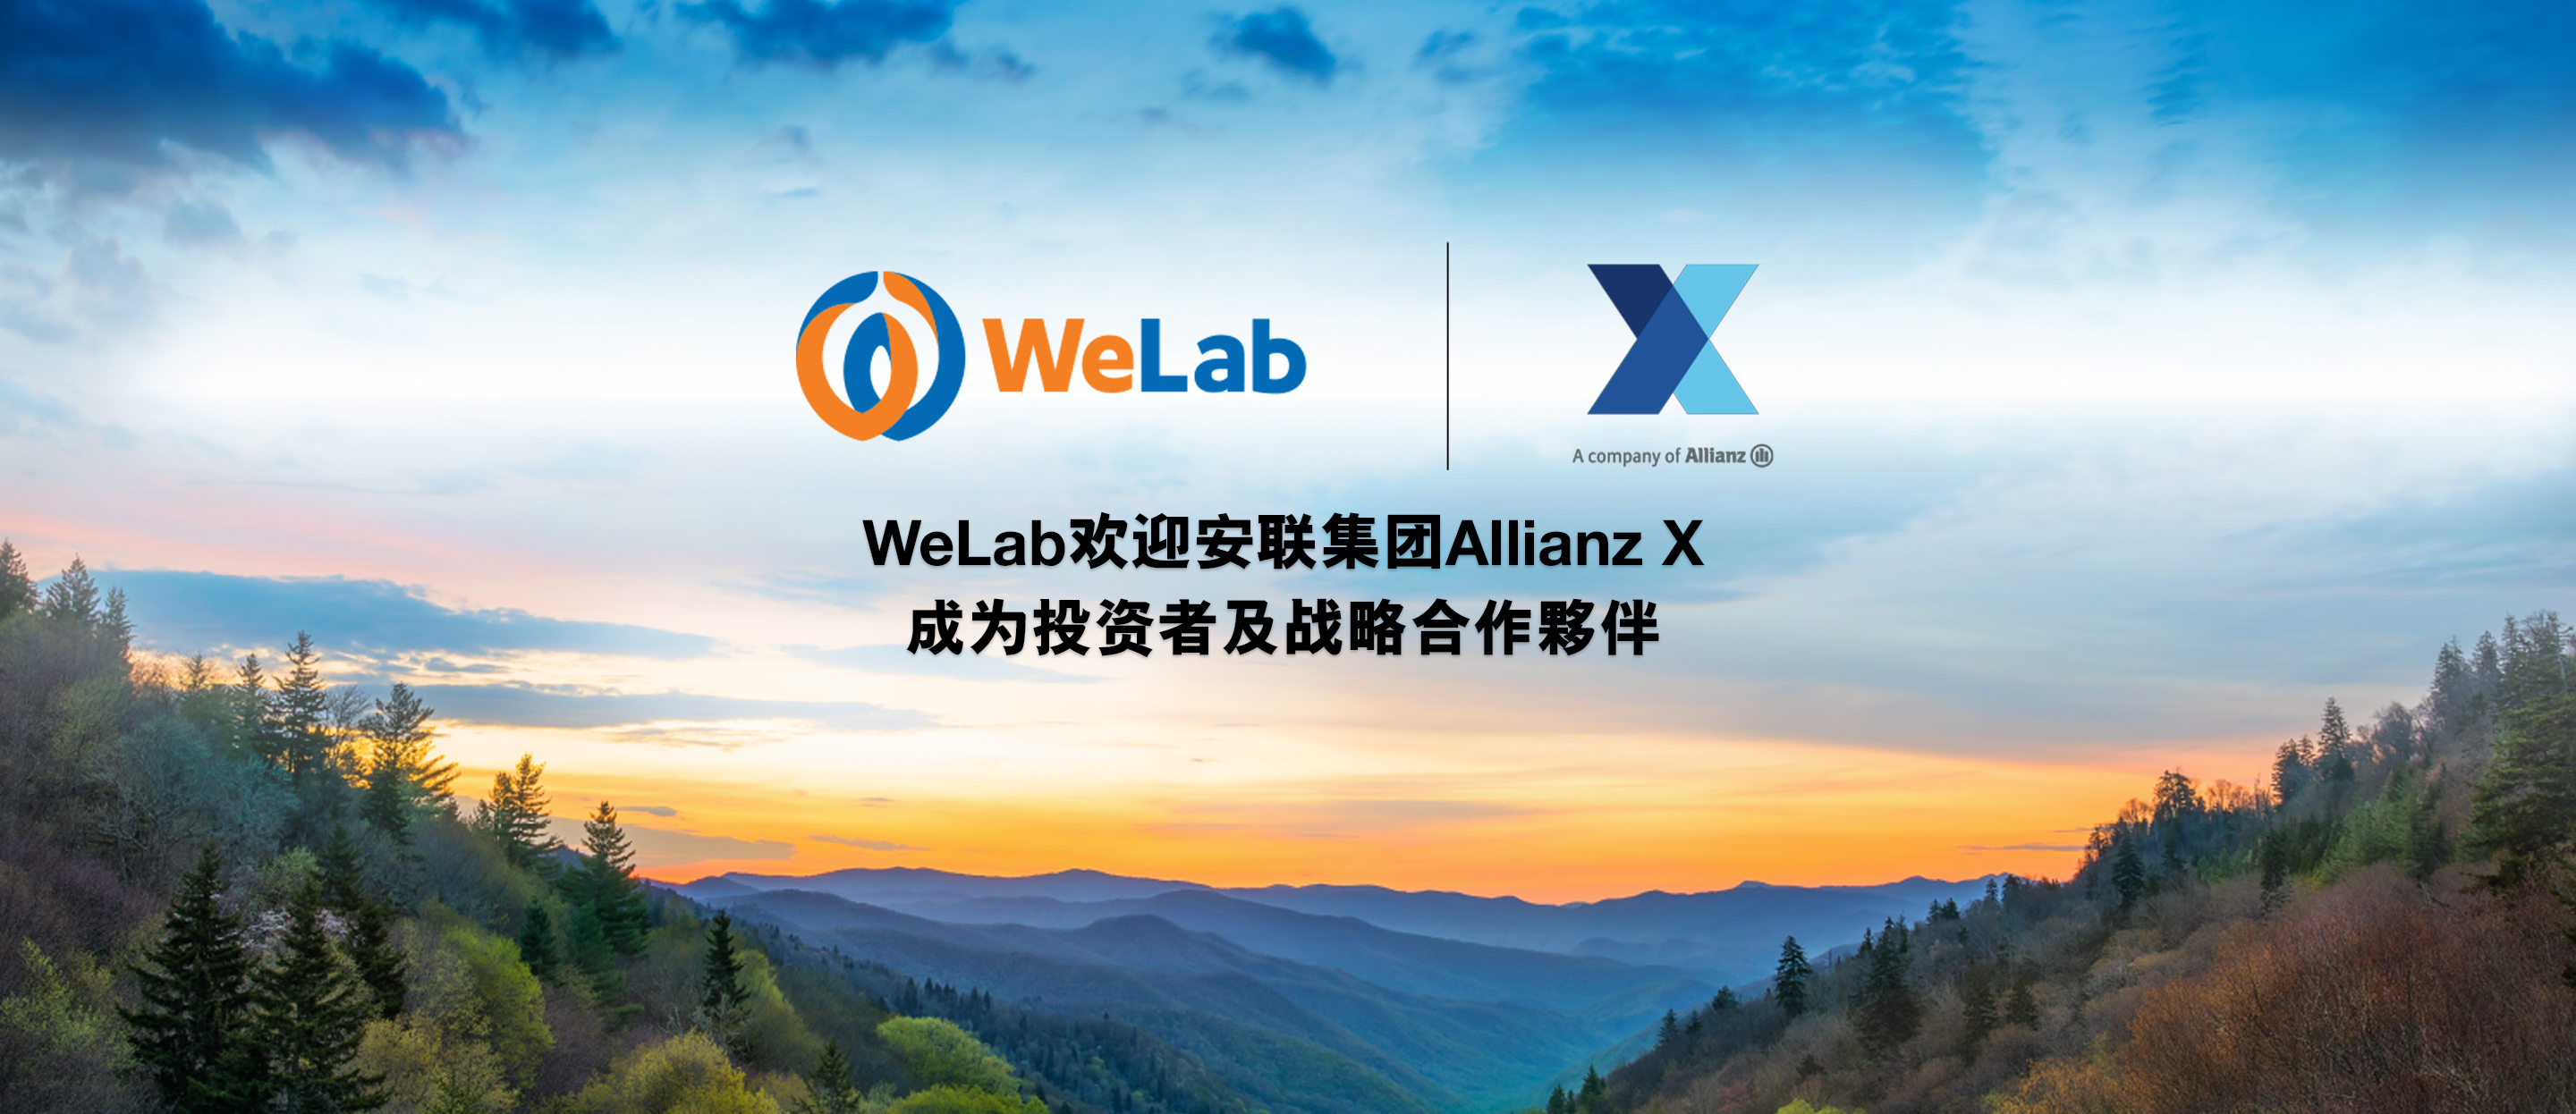 WeLab初步完成C-1轮融资，获安联集团Allianz X领投7500万美元